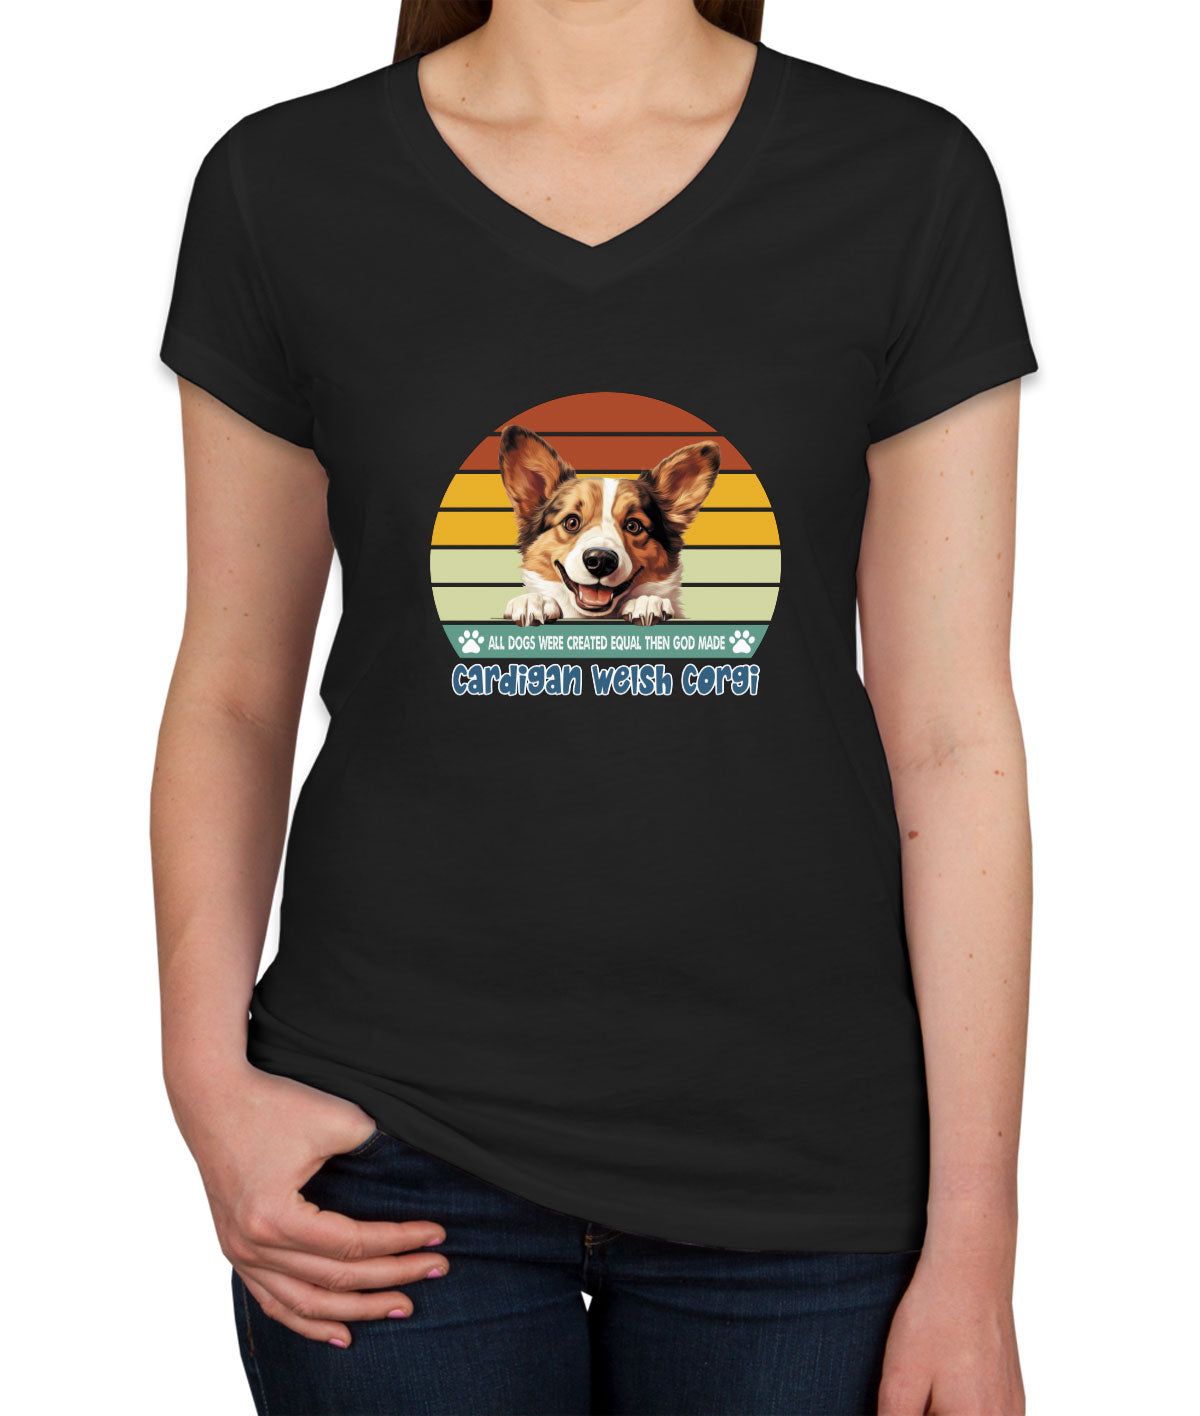 All Dogs Were Created Equal Cardigan Welsh Corgi Women's V Neck T-shirt